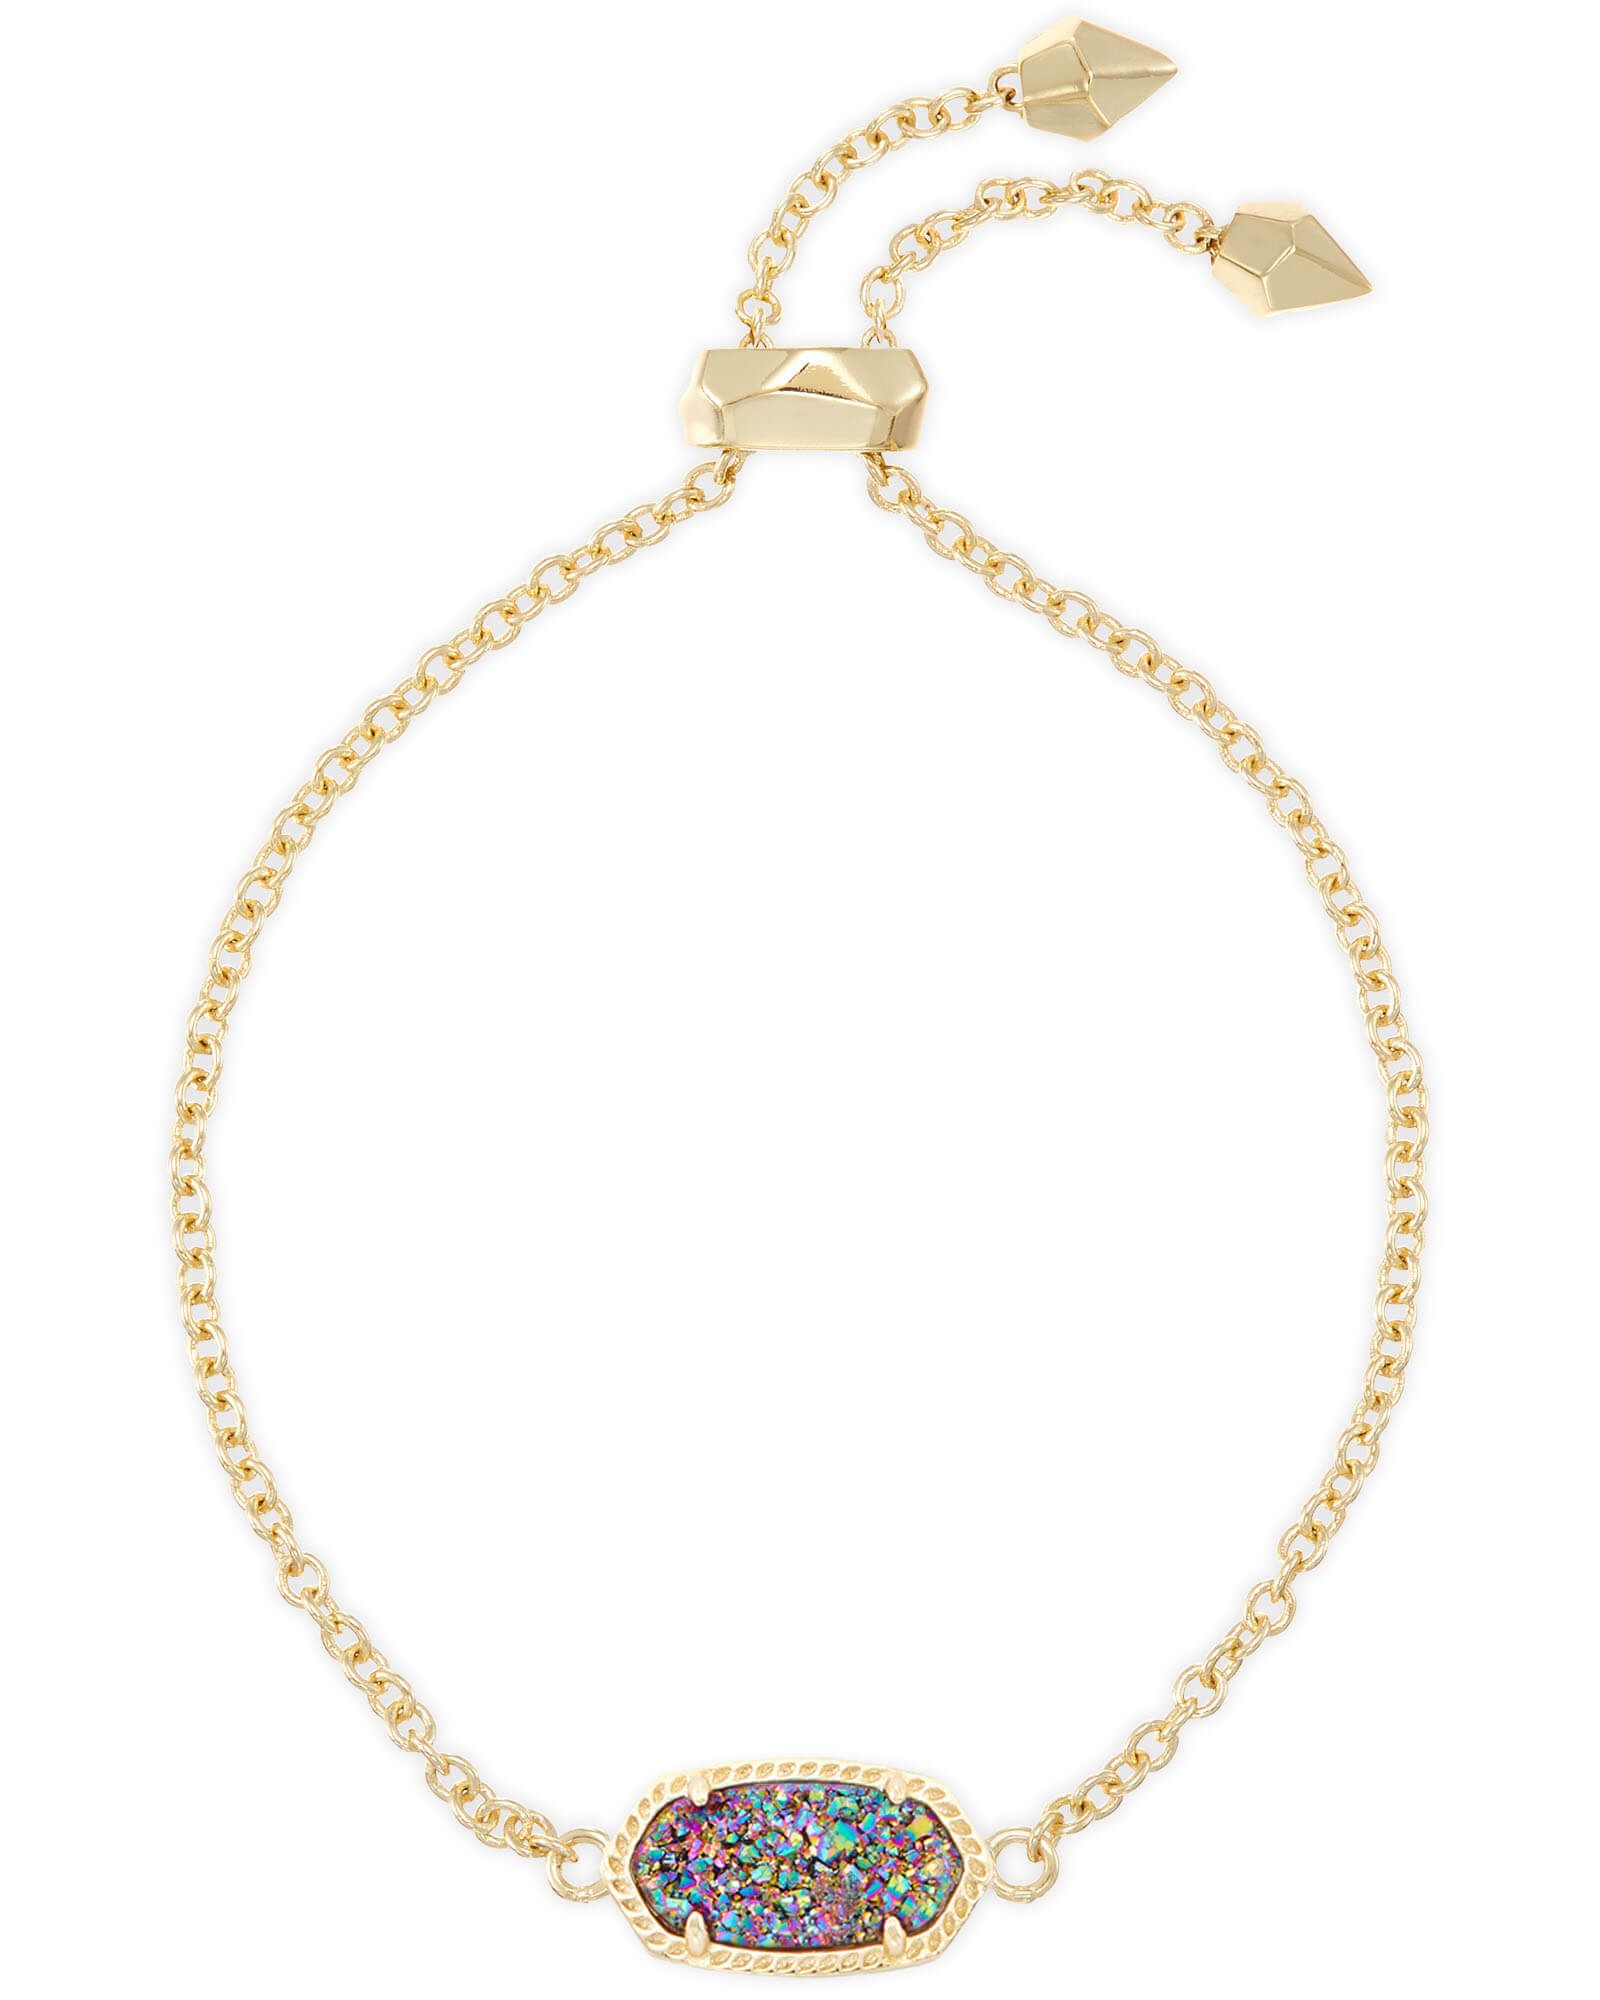 Elaina Gold Adjustable Chain Bracelet in Multicolor Drusy | Kendra Scott